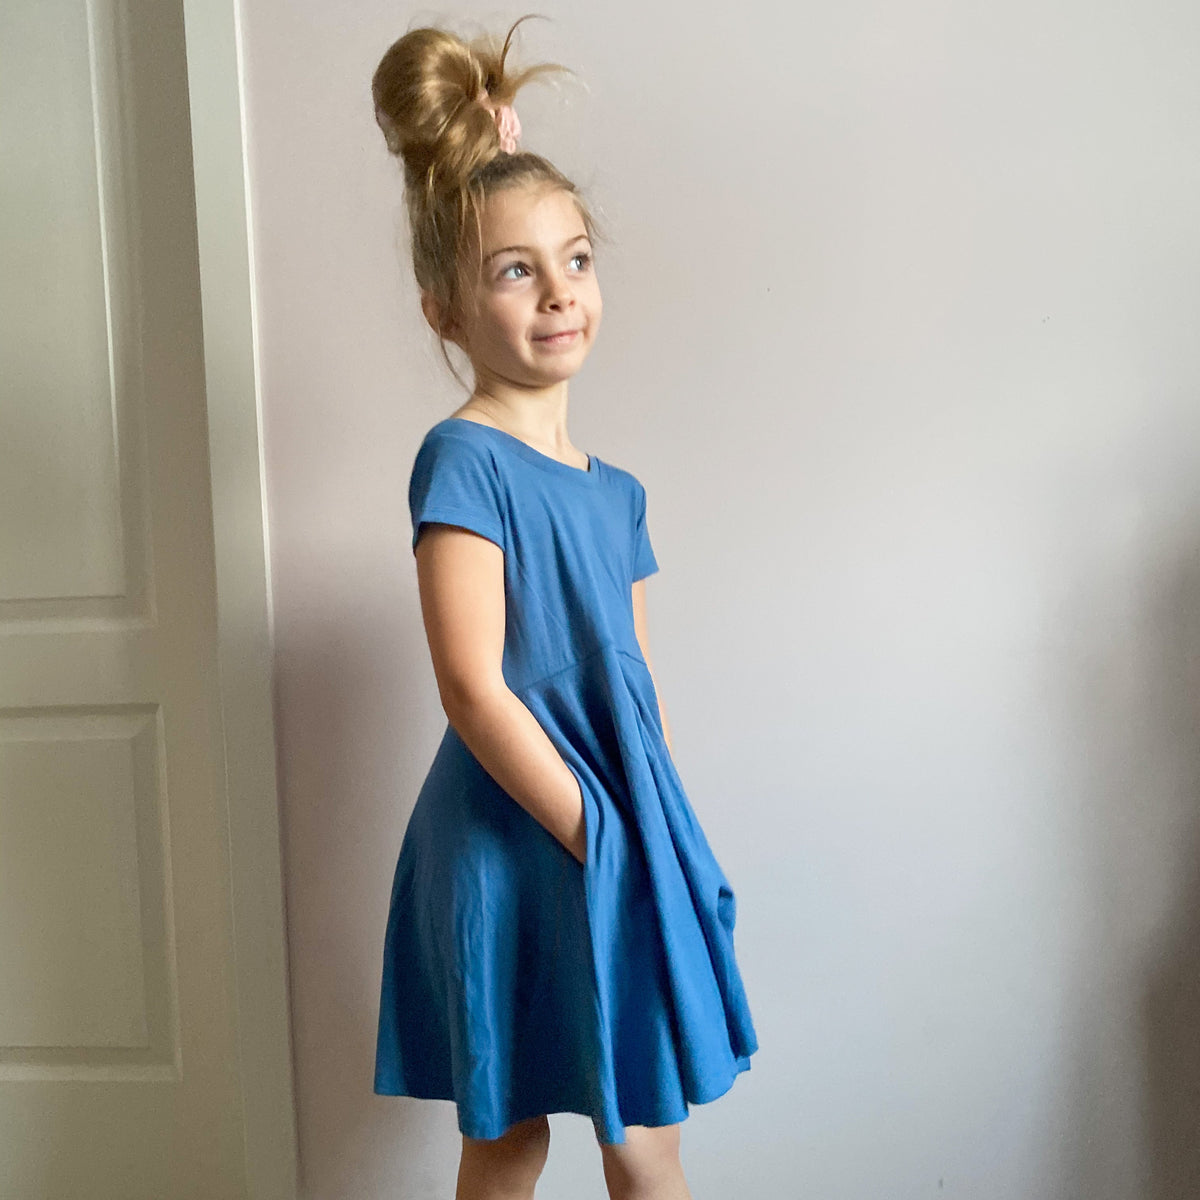 Elle Twirl Dress [Cap Sleeve] in 'Starburst' - Ready To Ship